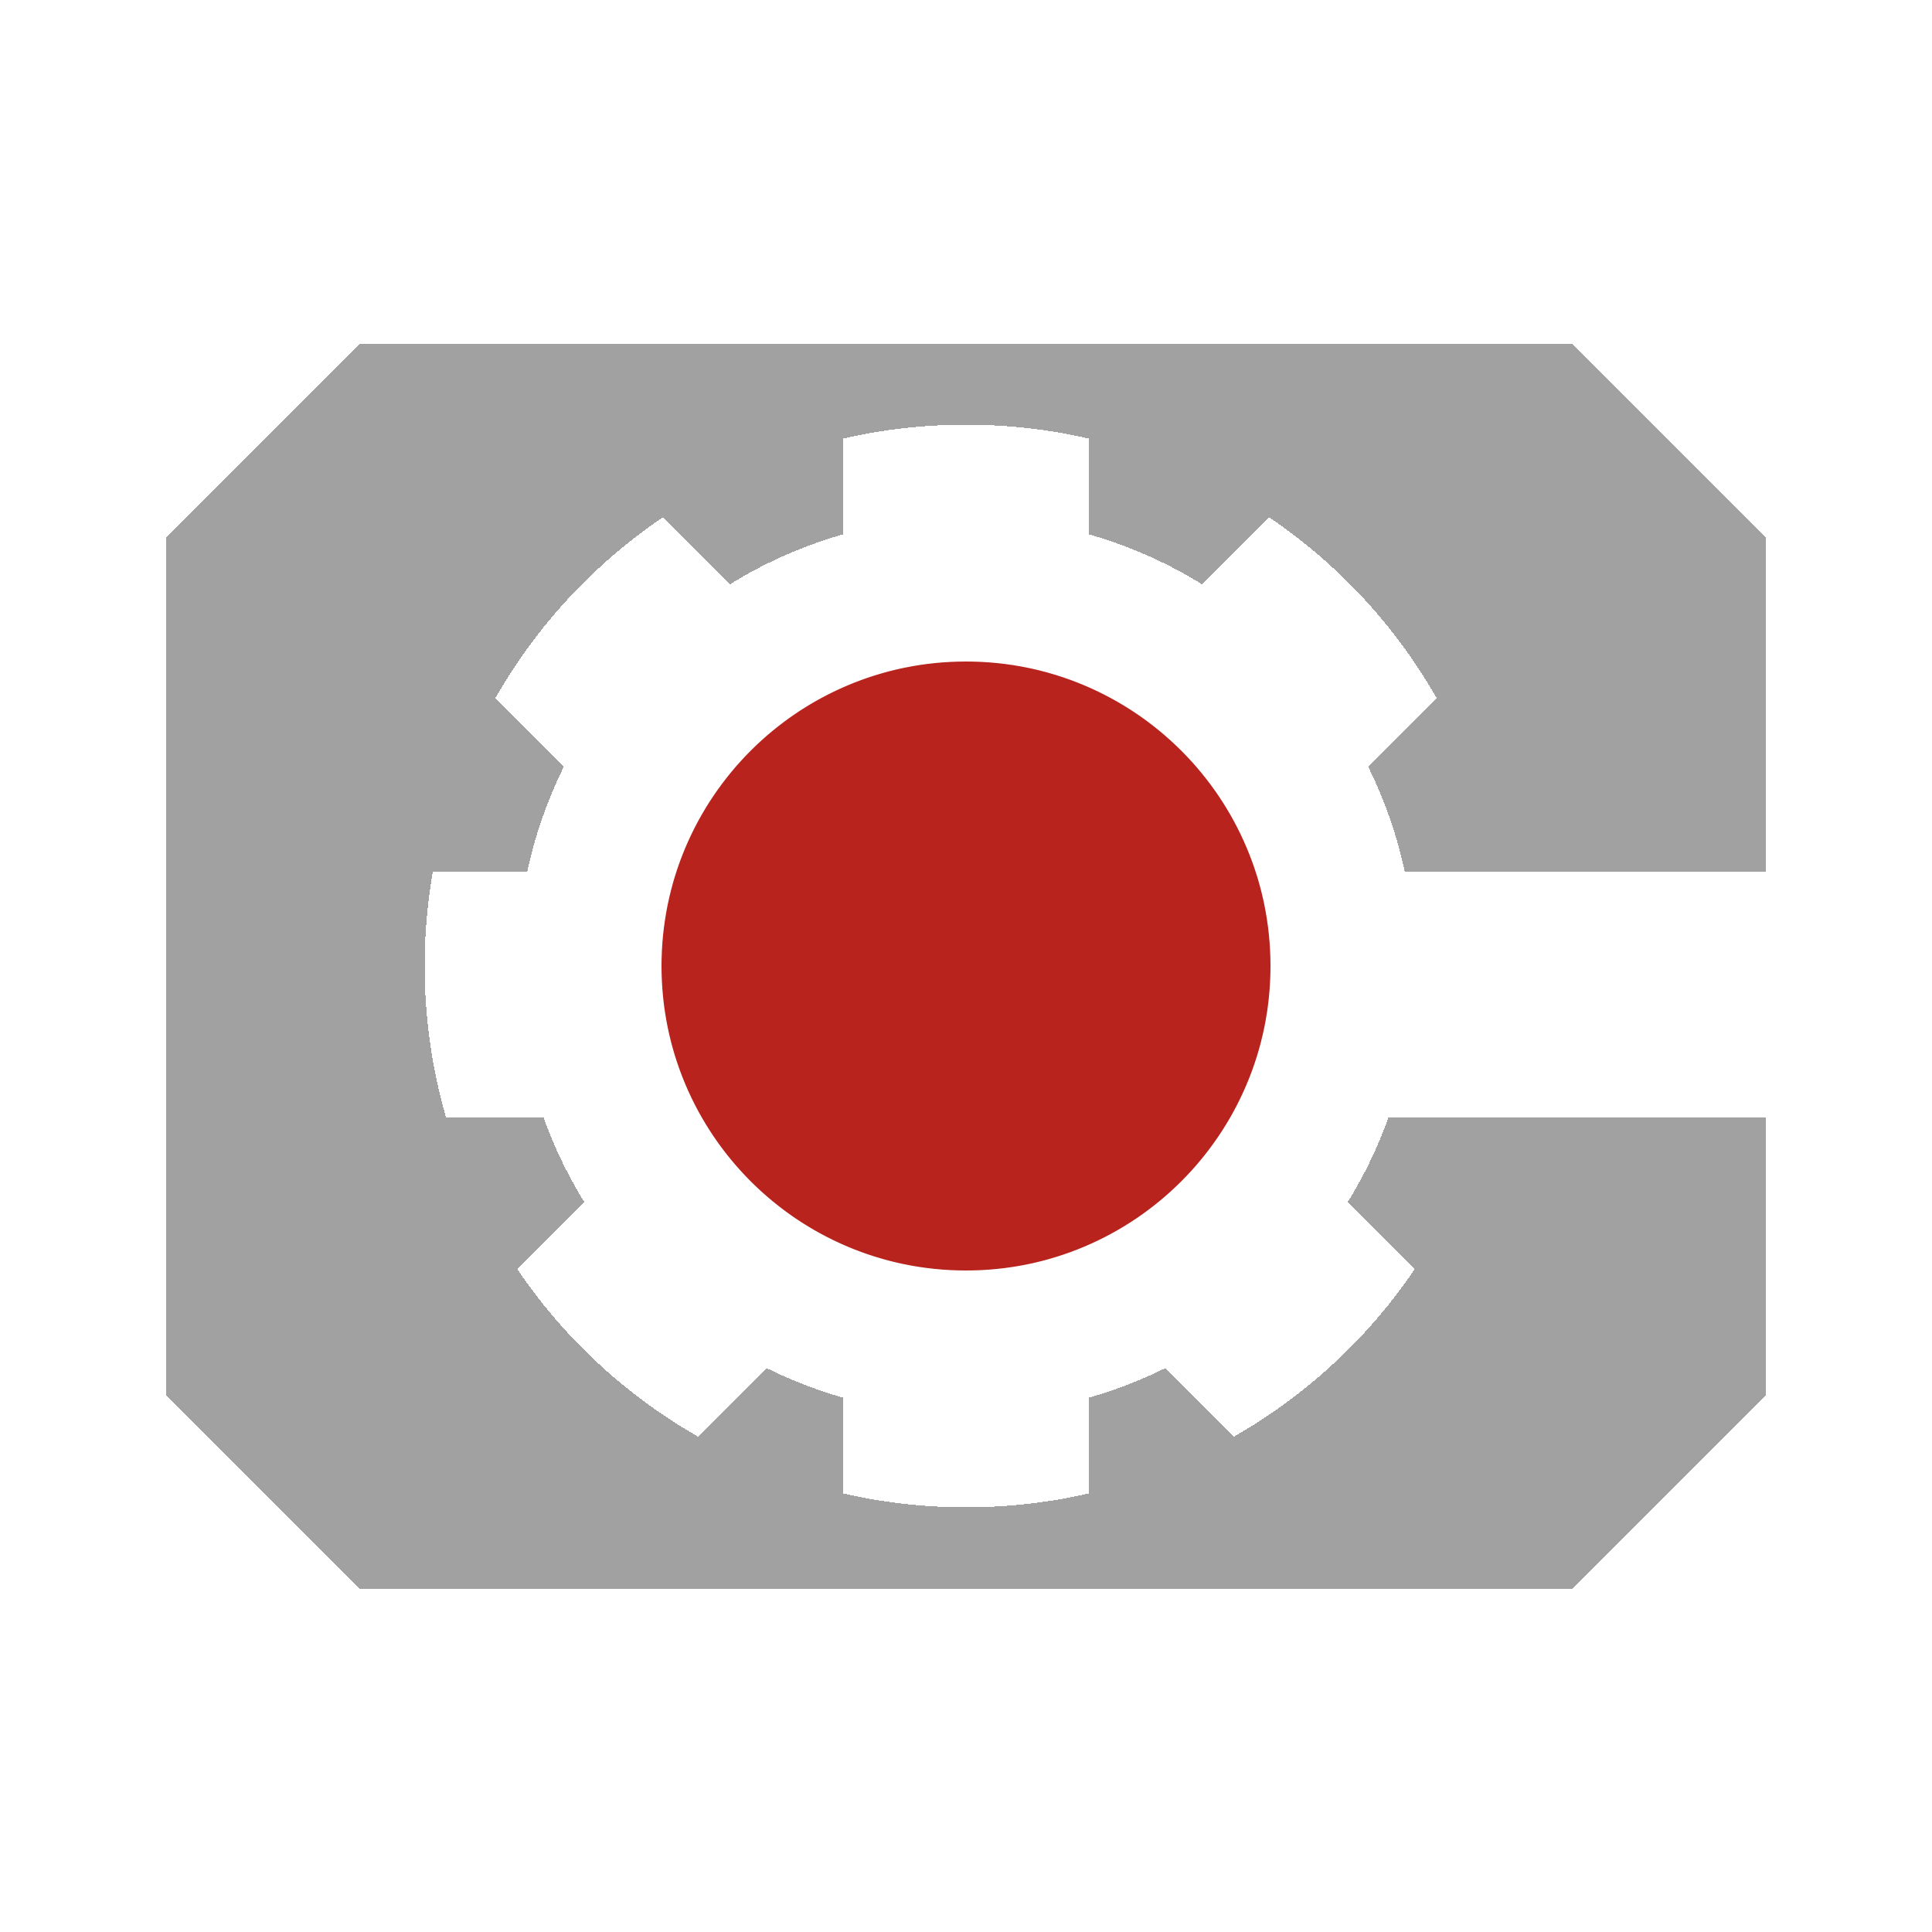 Cyborg Logo - I couldn't find a good quality version of Cyborg's logo, so I ...